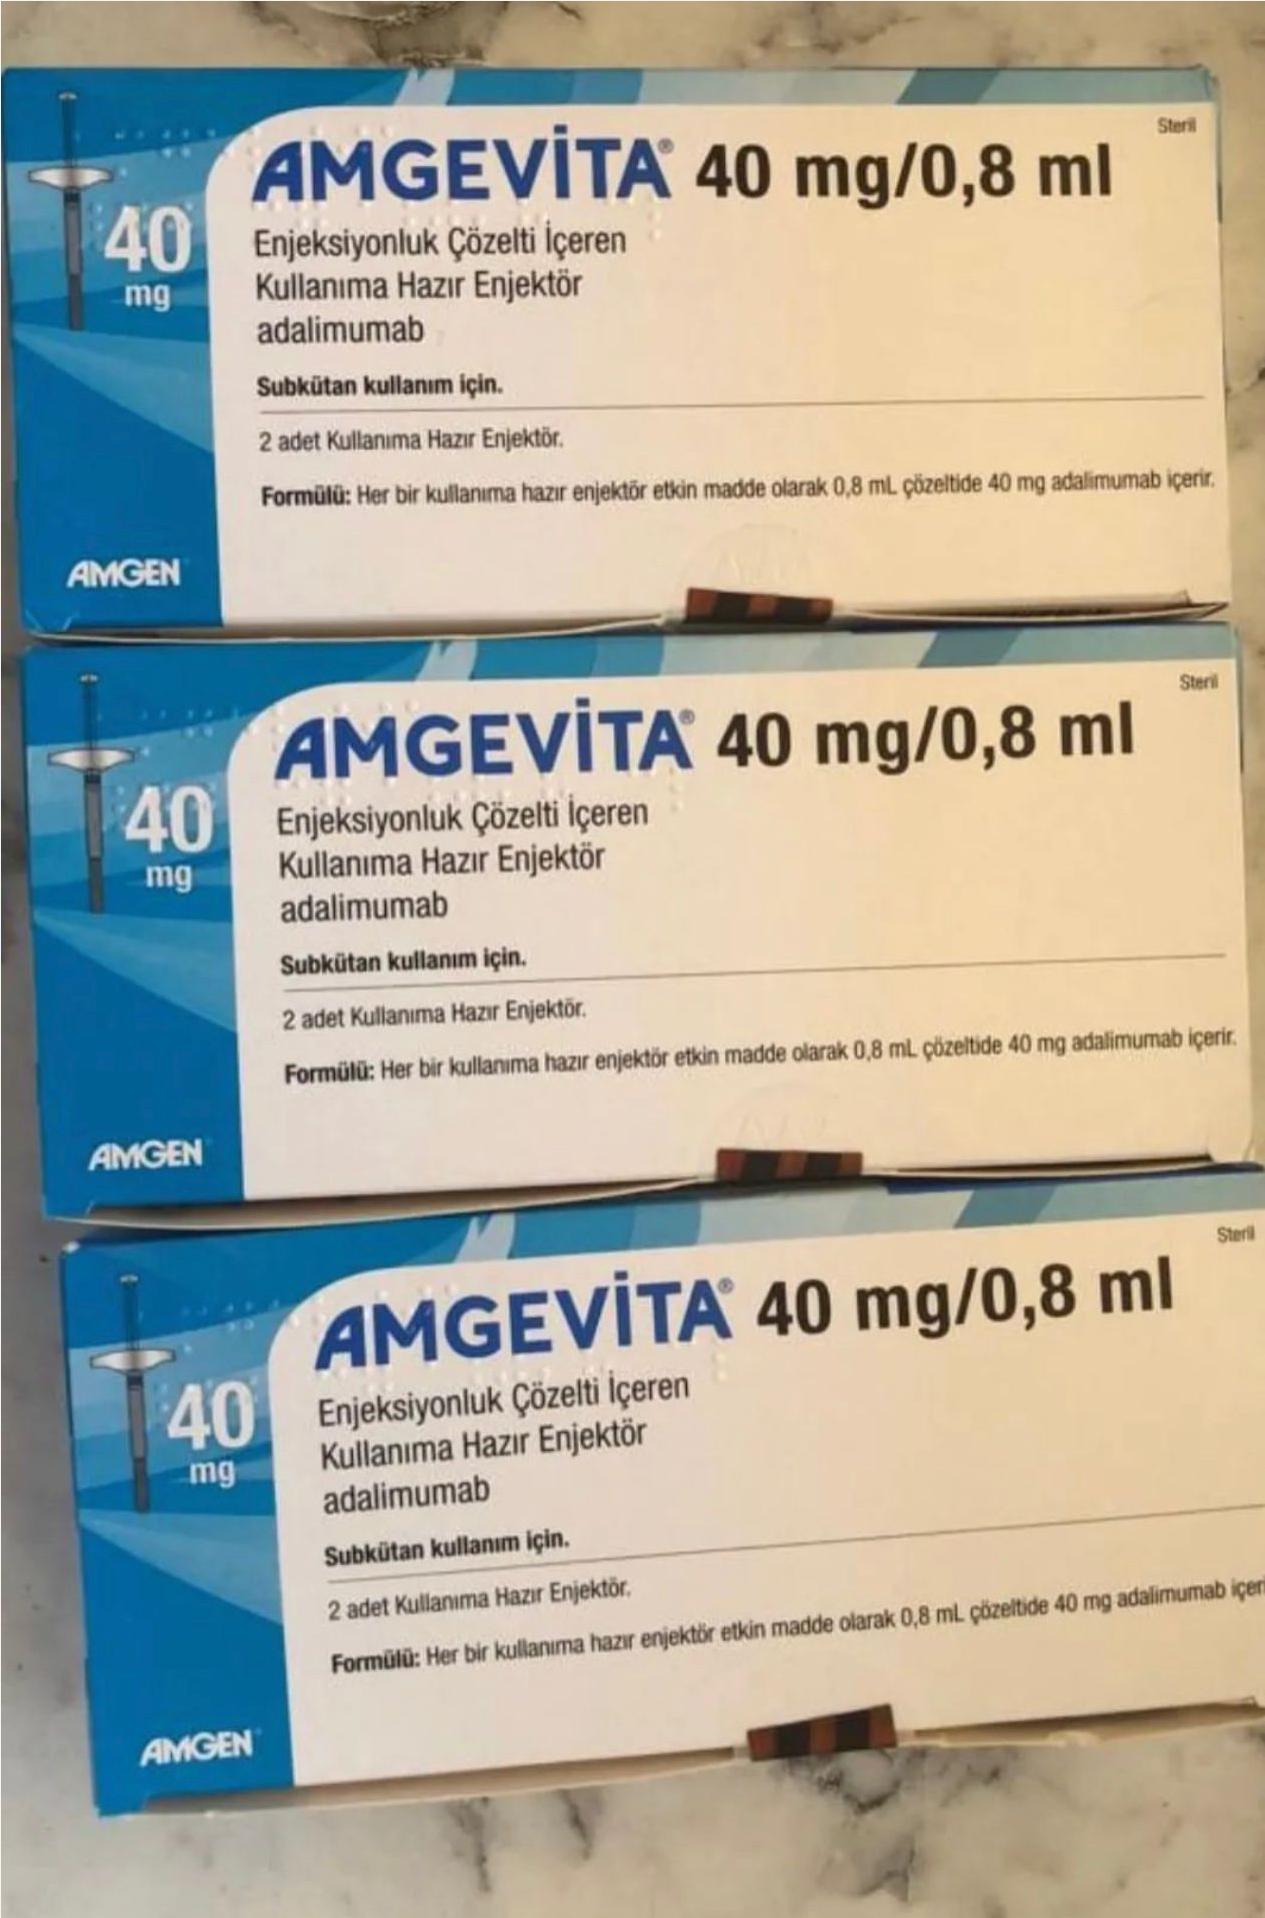 Thuốc Amgevita Adalimumab giá bao nhiêu mua ở đâu?